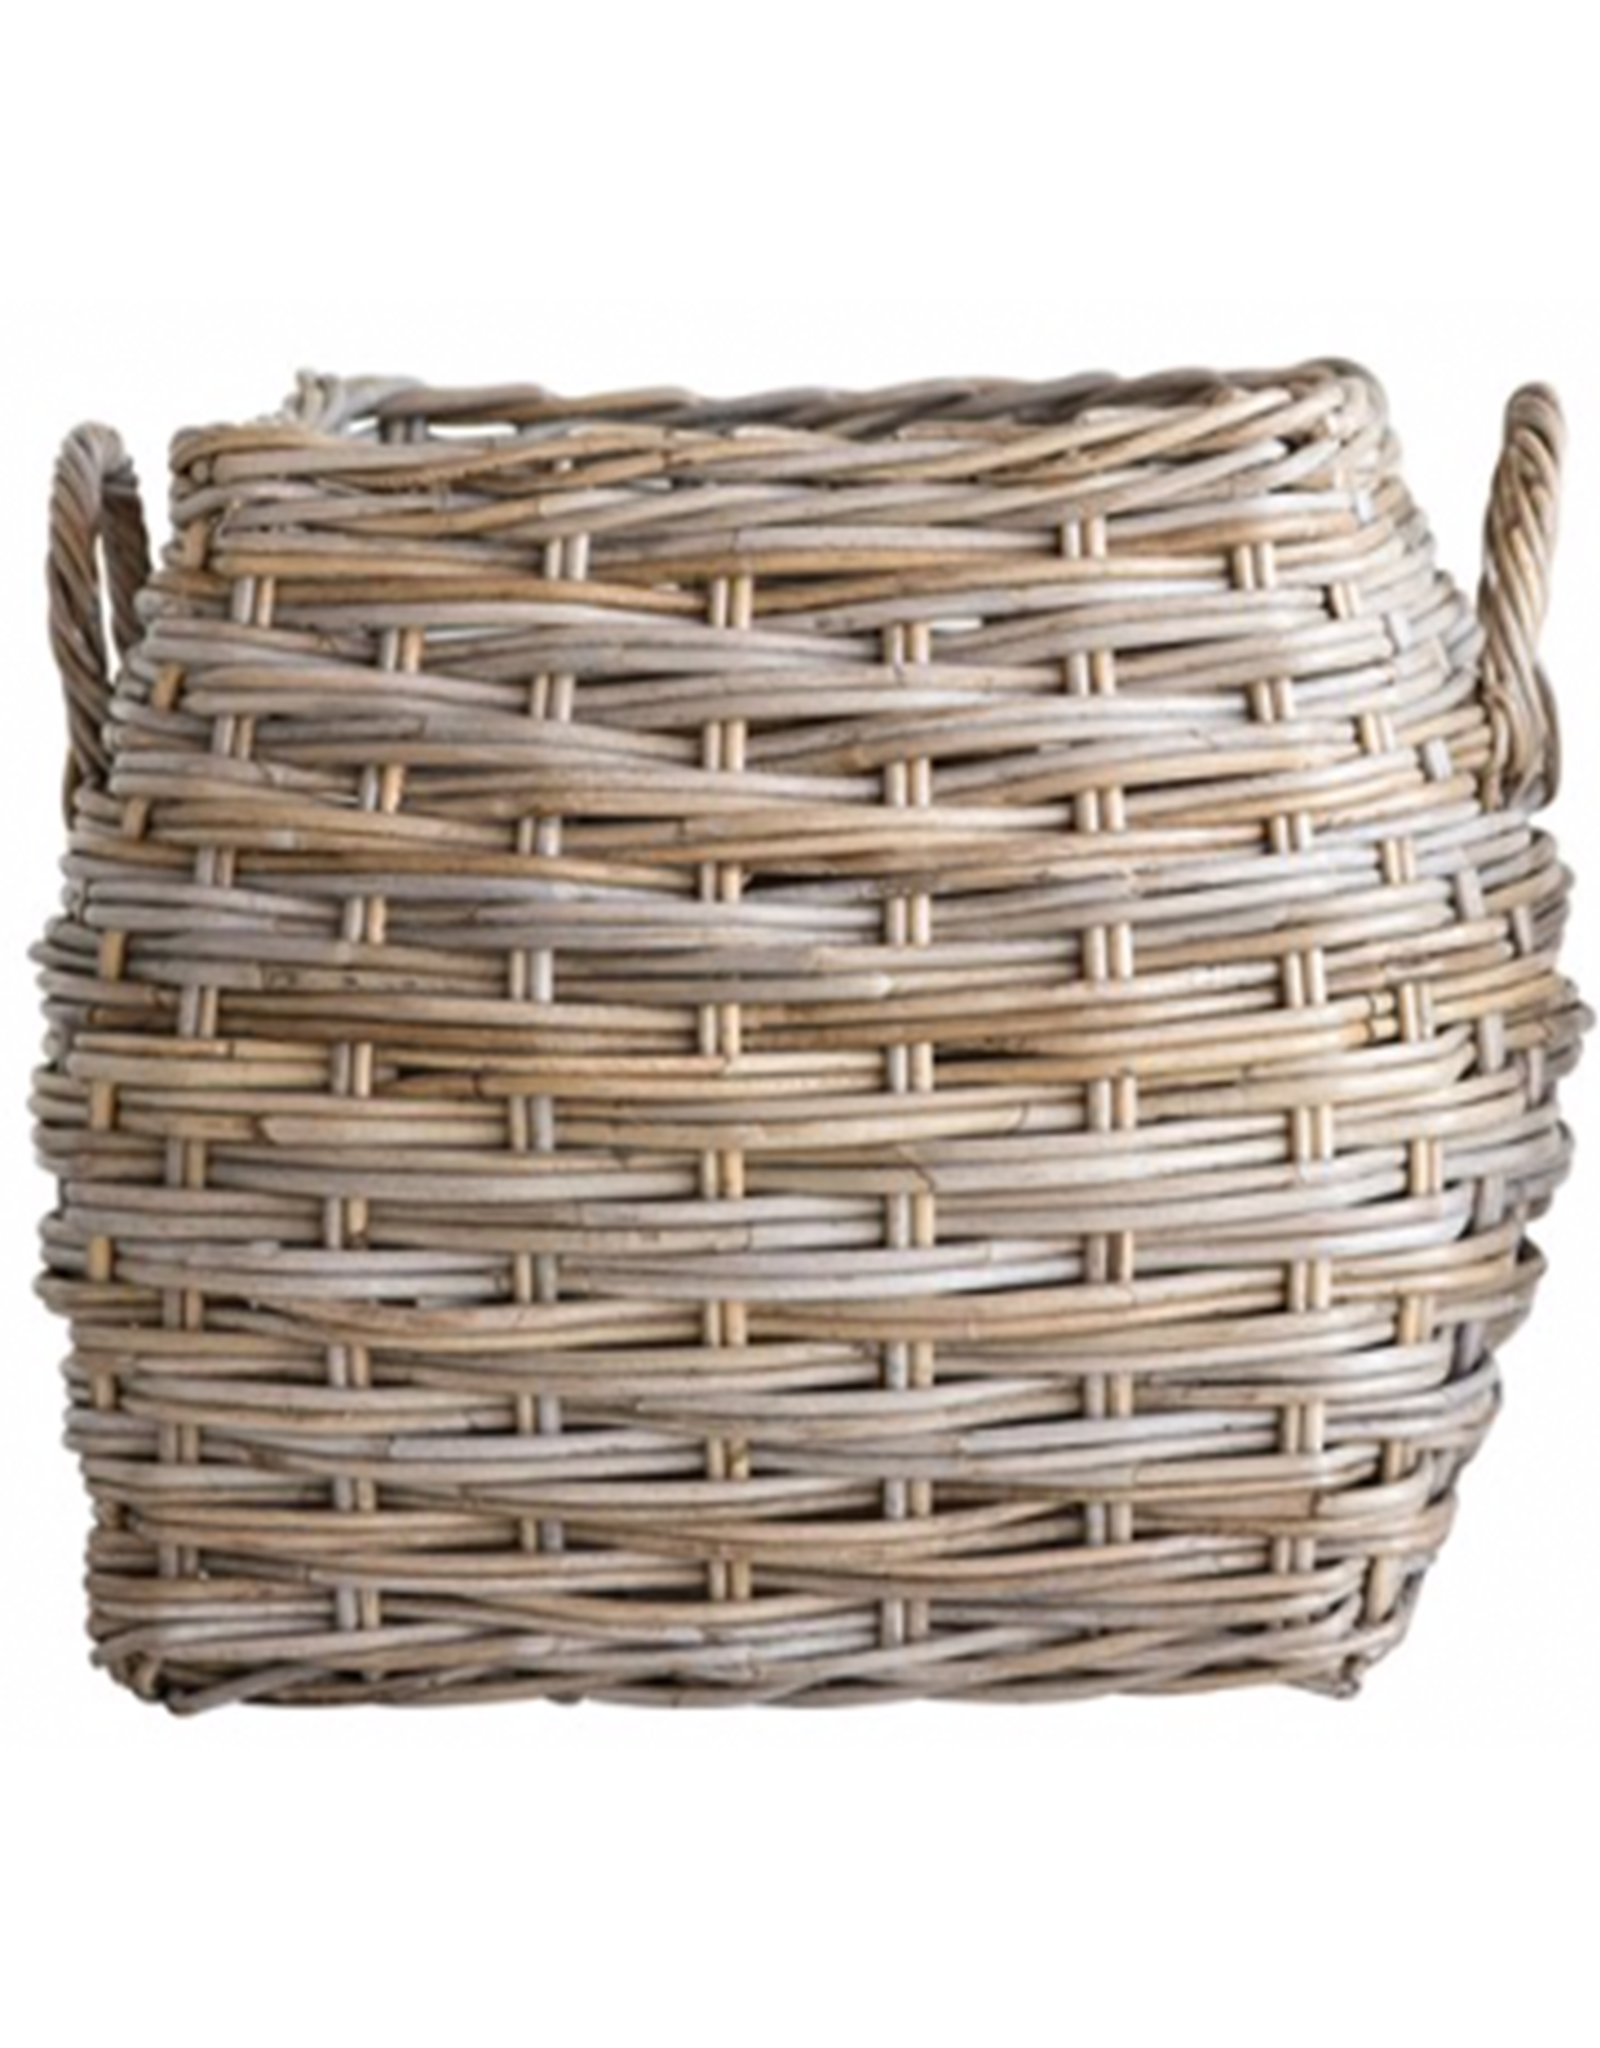 Square Natural Rattan Basket w/Handles -16" Square x 16"H